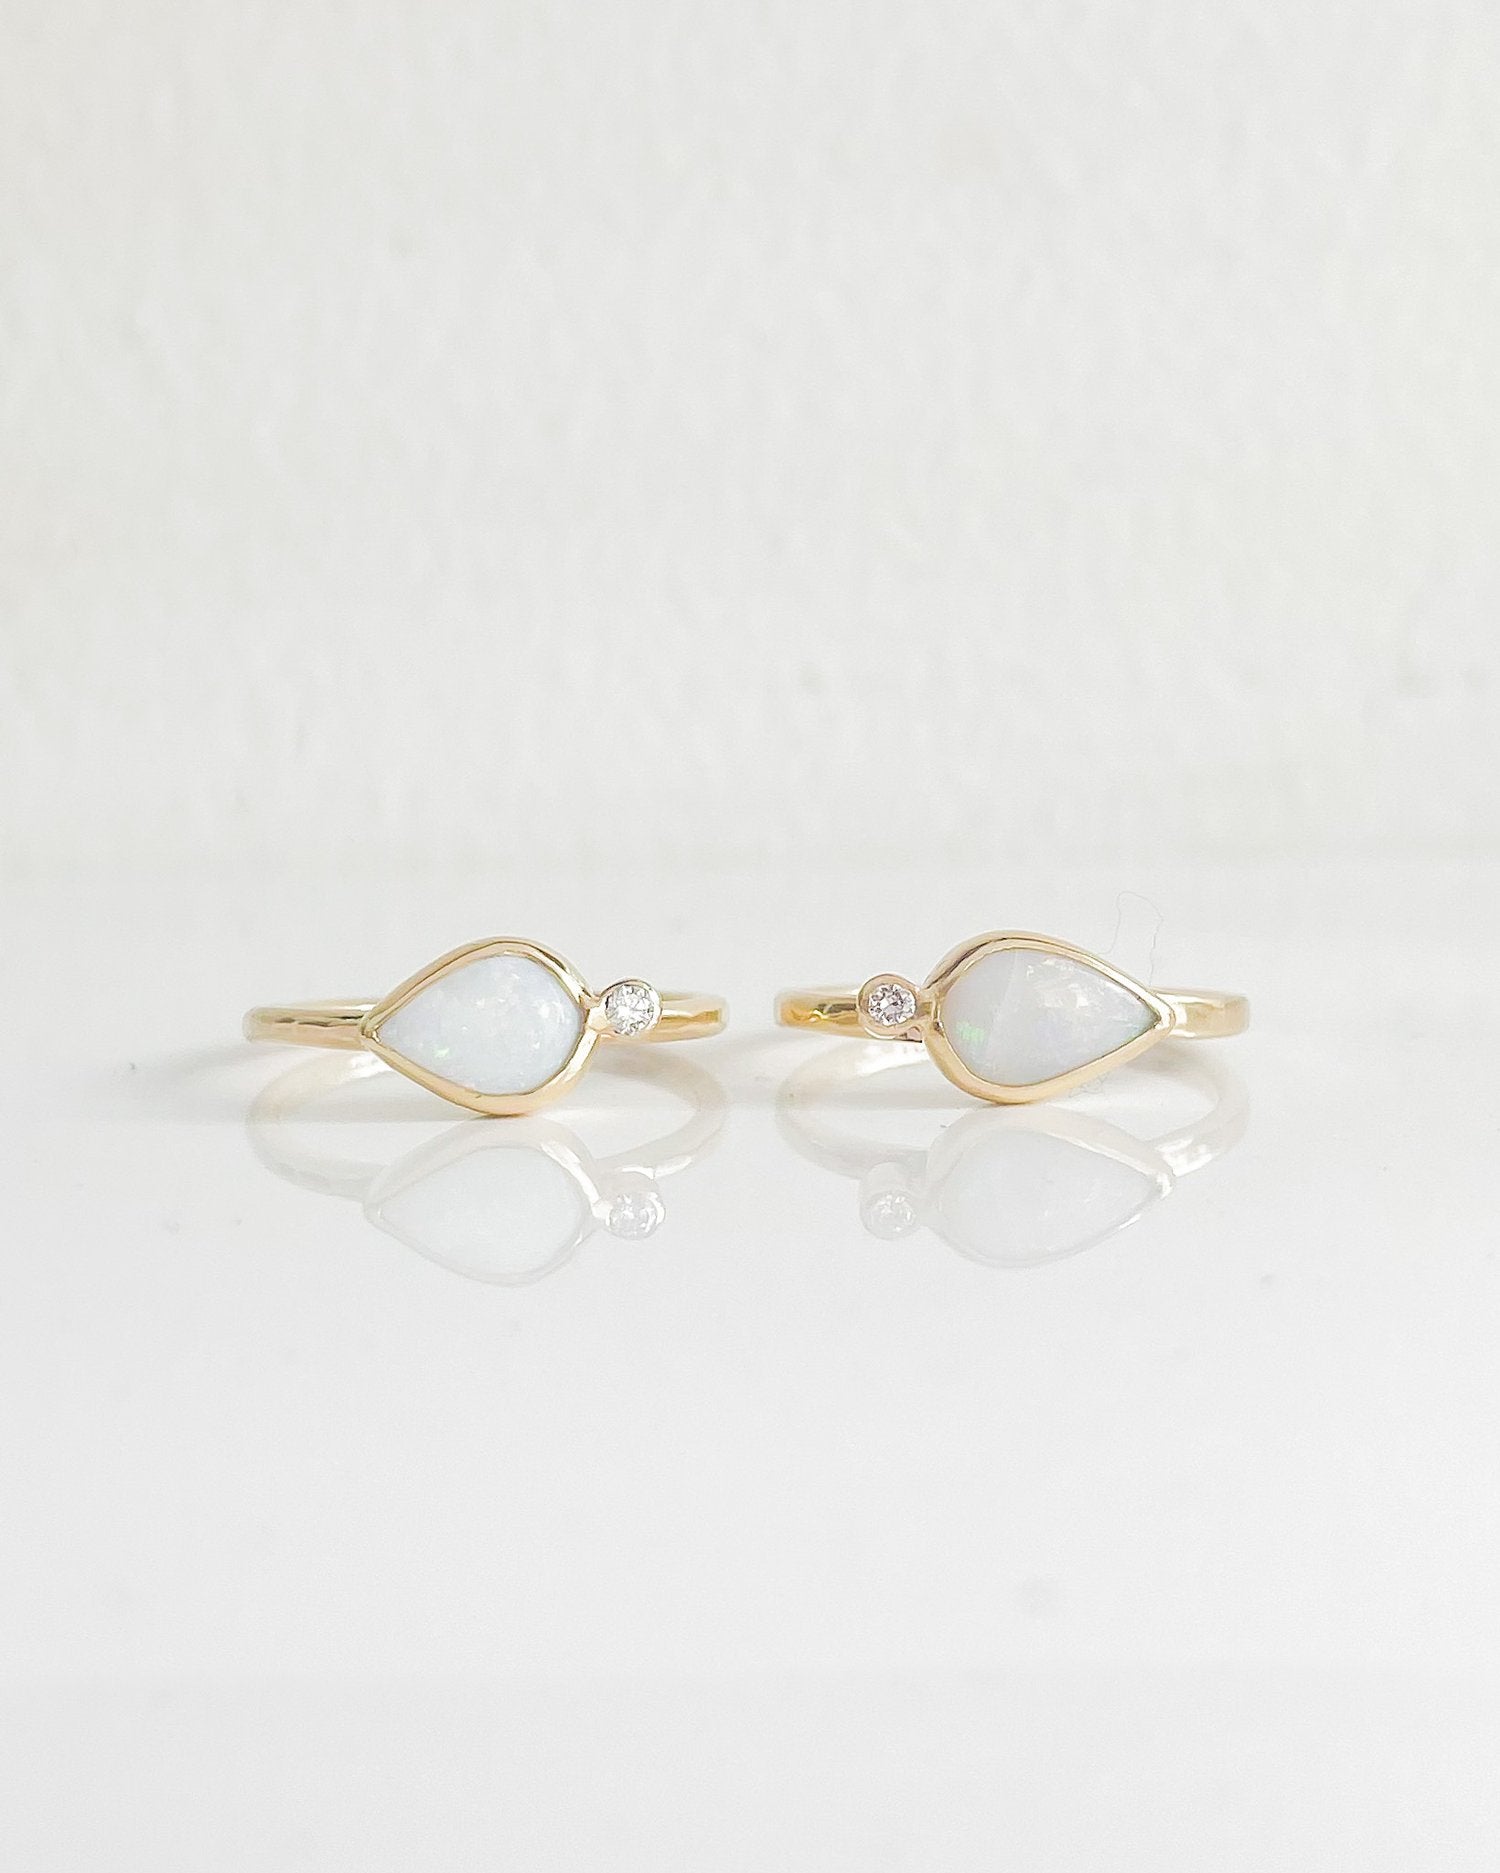 SUN & SELENE opal and diamond engagement rings